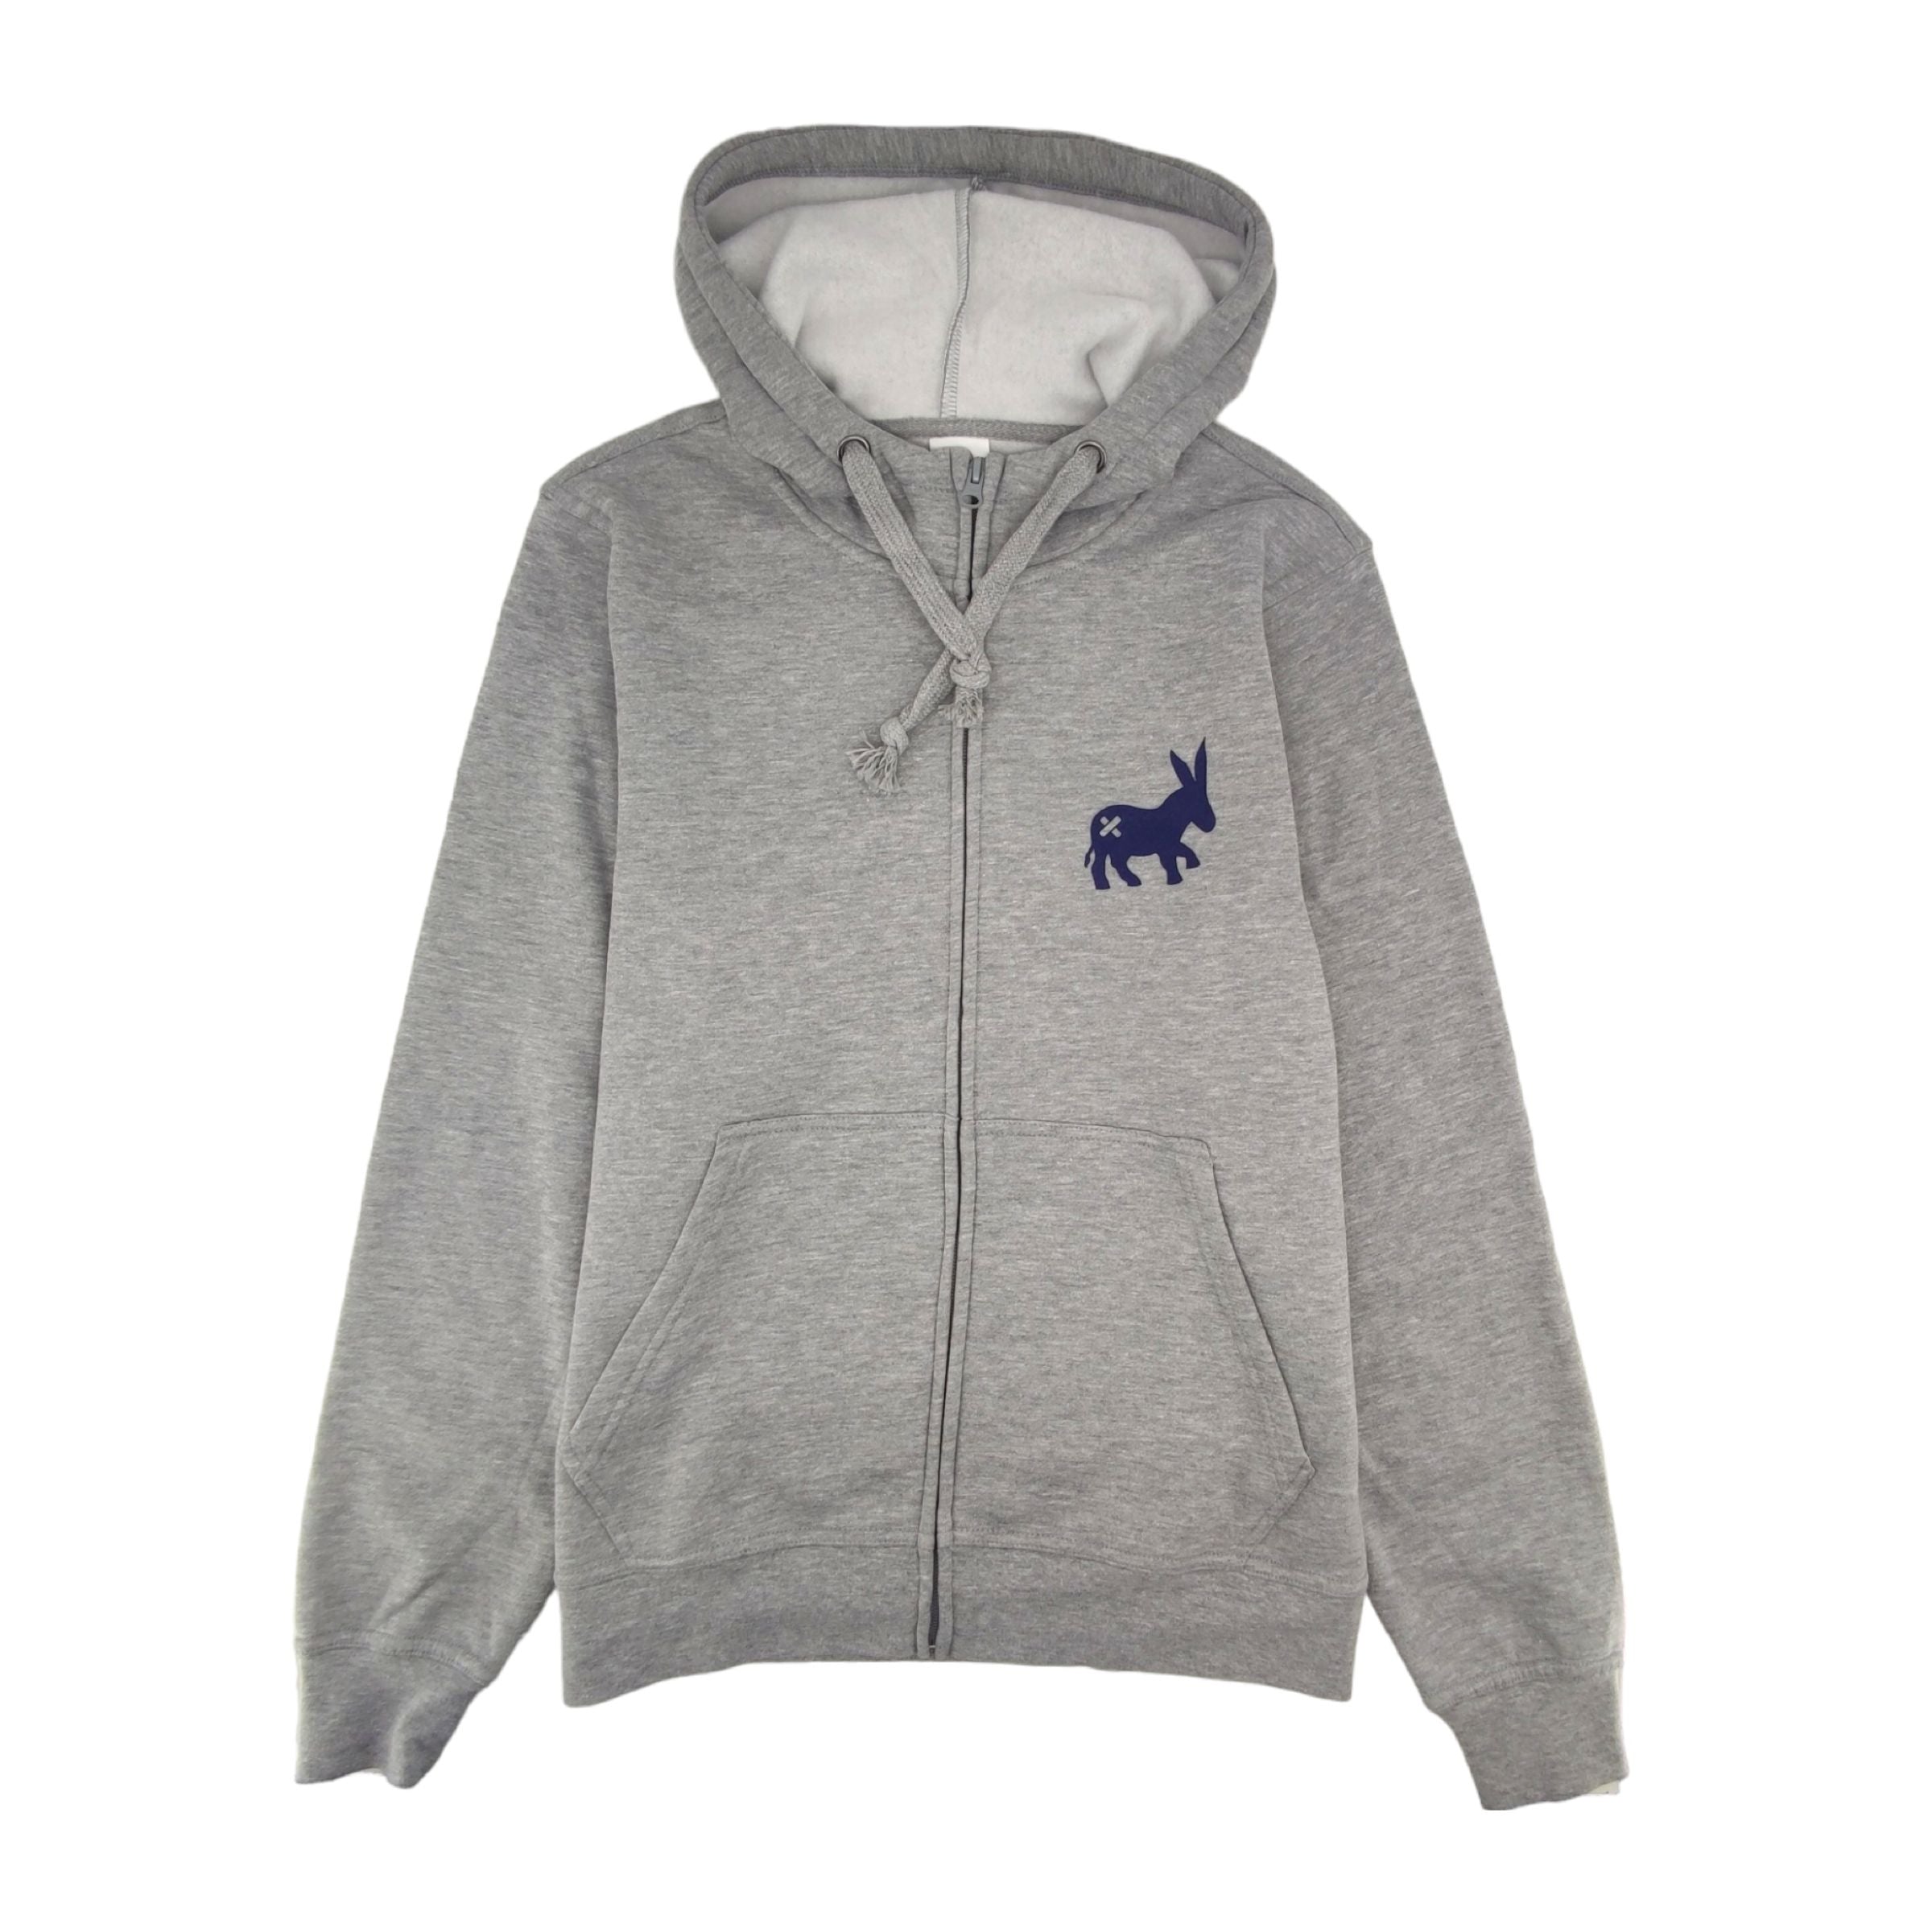 Men's Hoodie Full-Zip Sweater Grey/Blue 